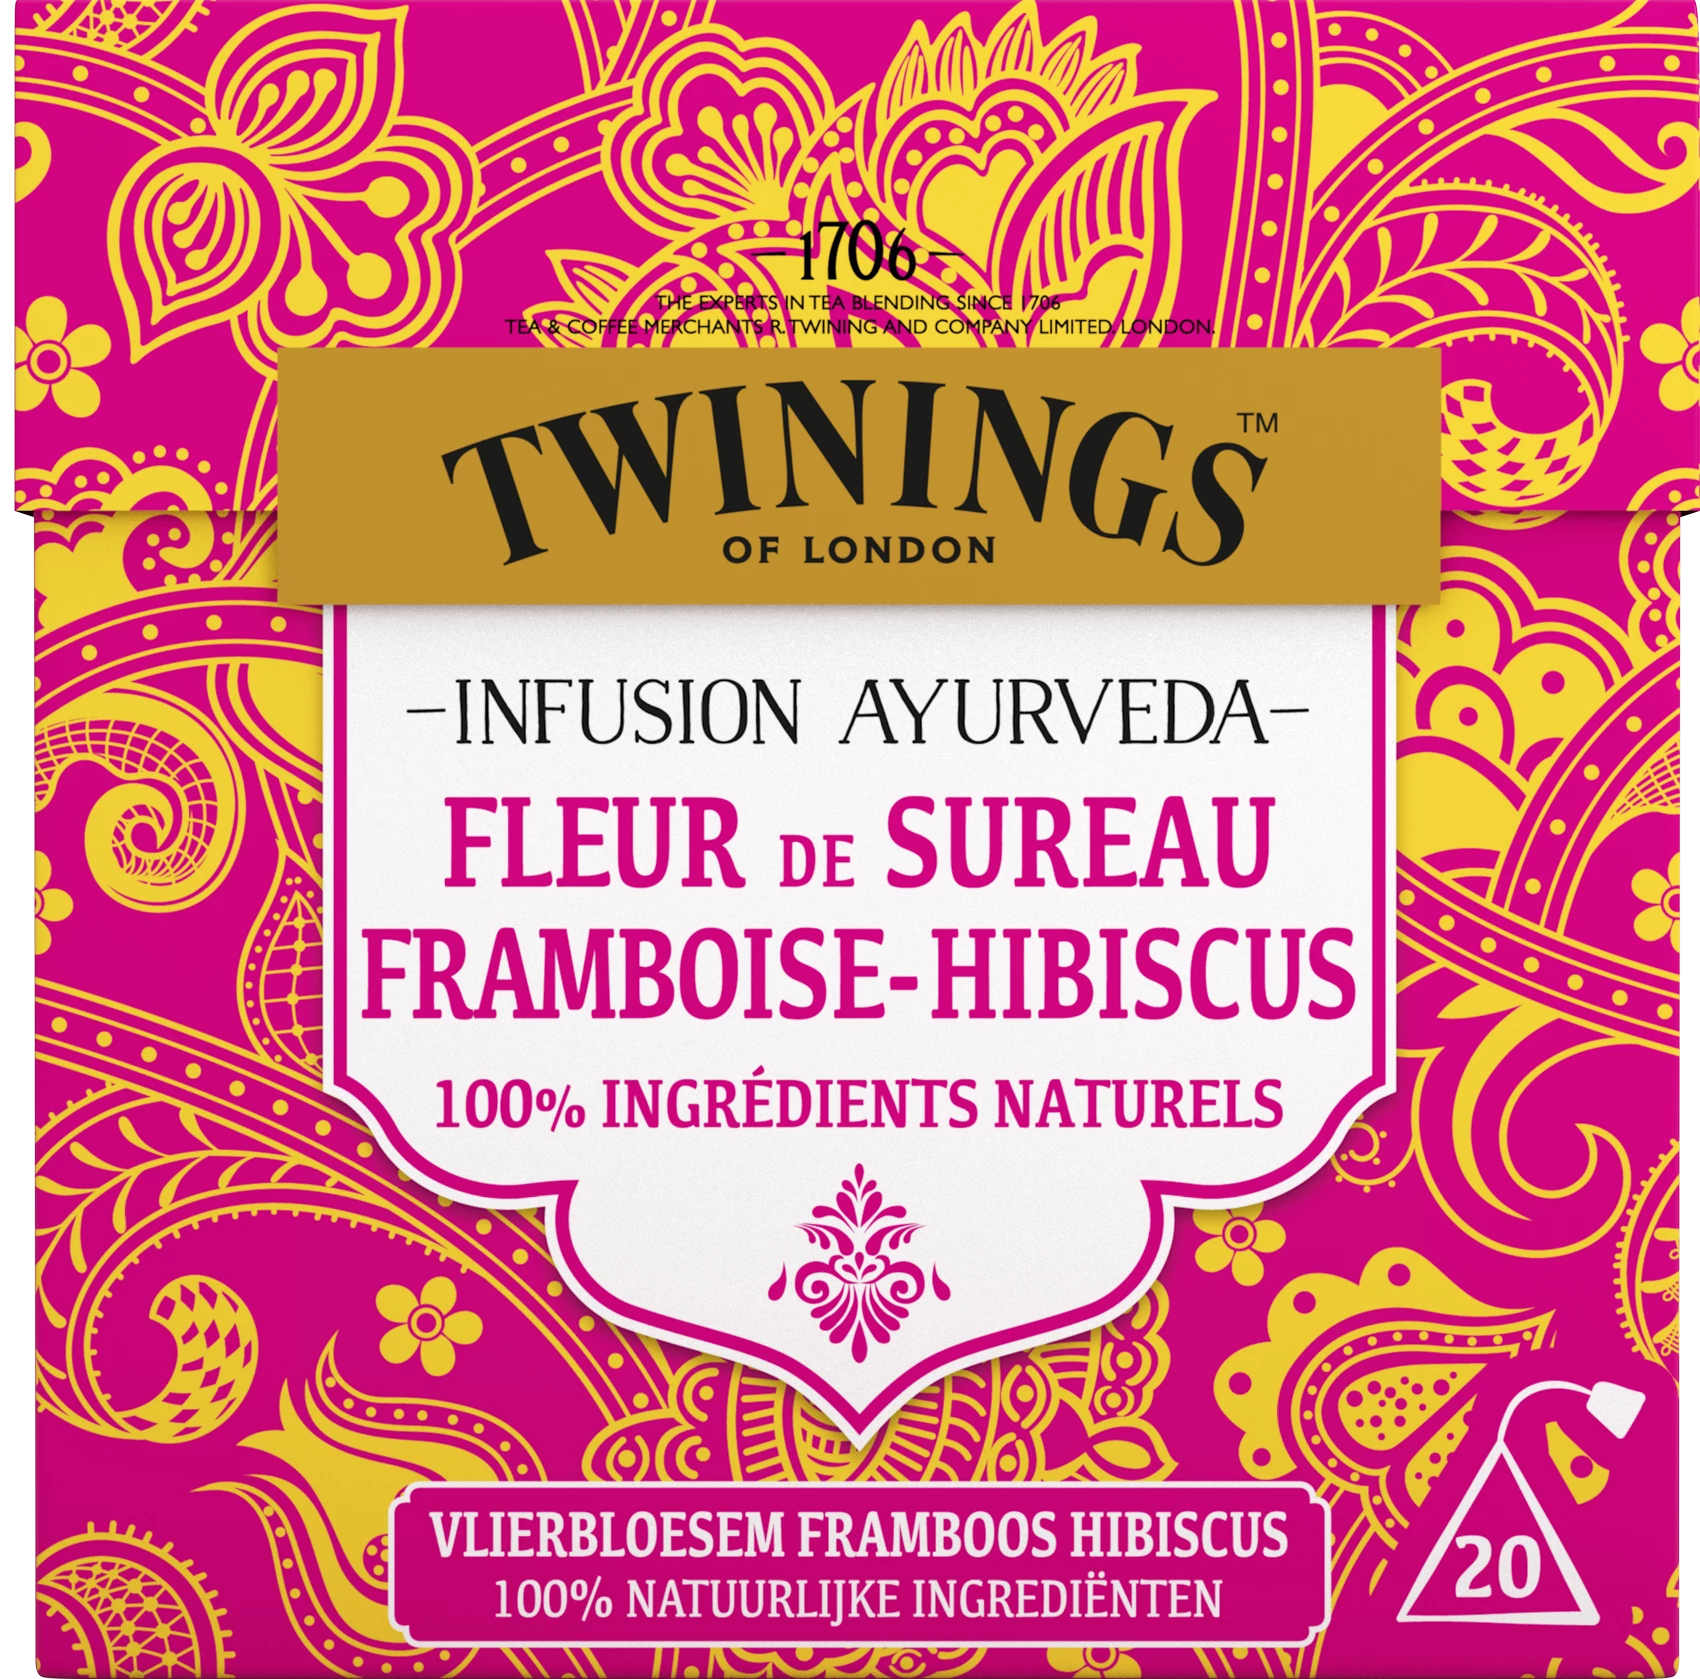 Infusion Ayurveda Fleur de Sureau, Framboise, Hibiscus x20, 36g - TWINNINGS